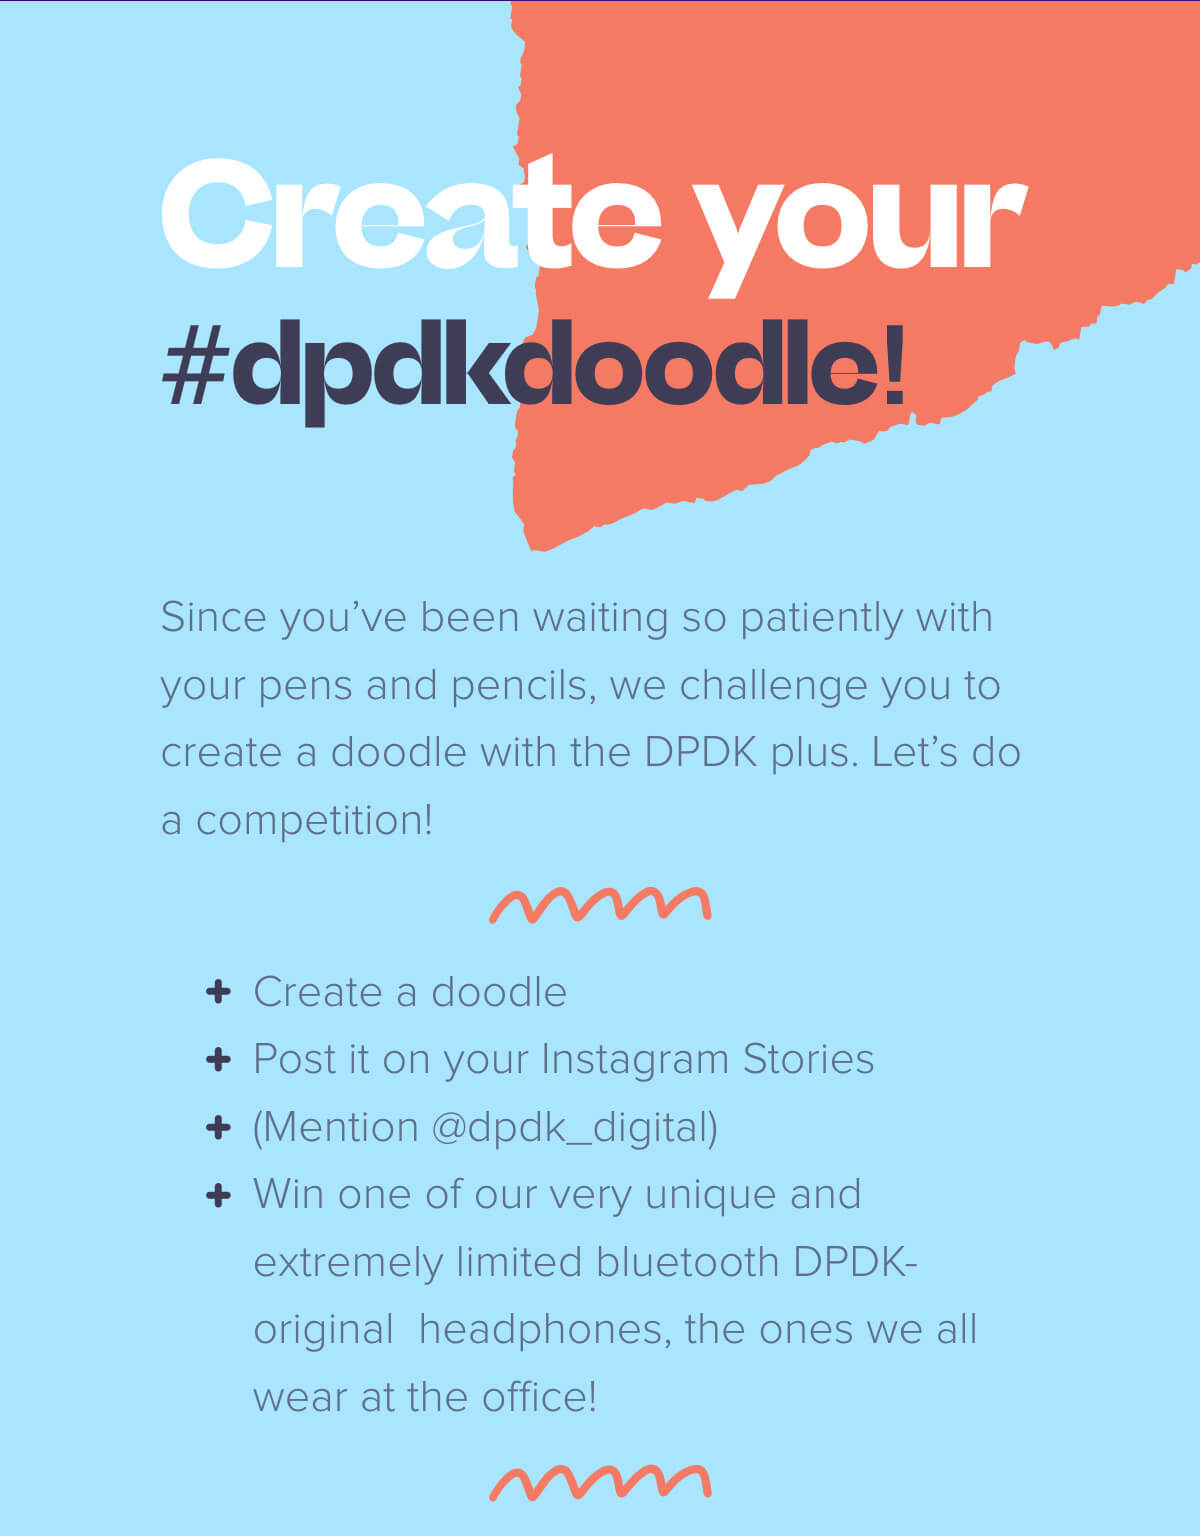 Create your #dpdkdoodle